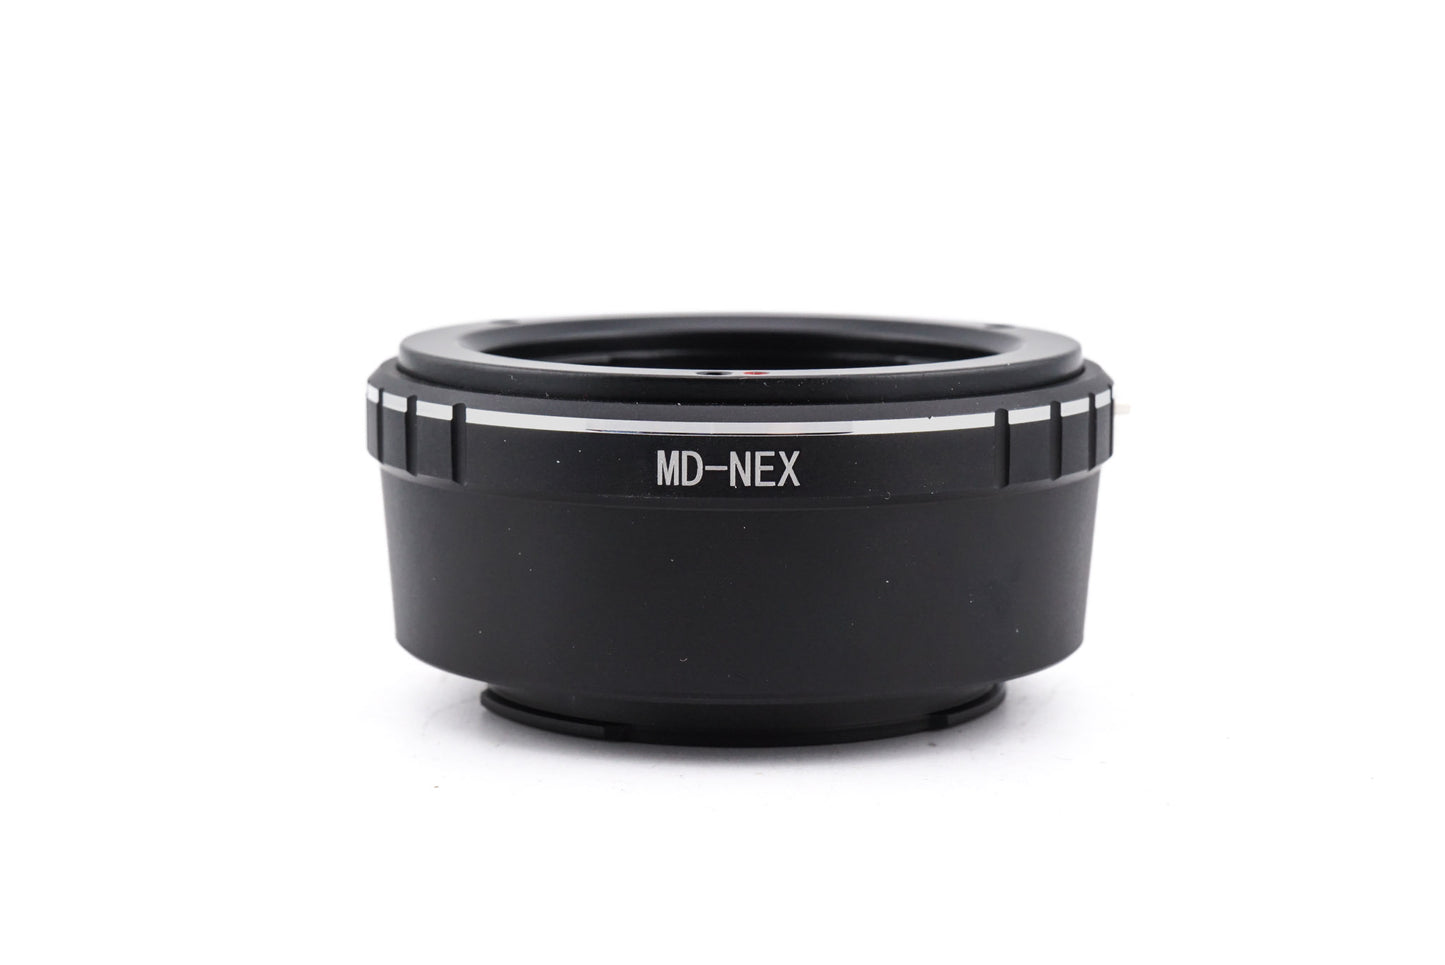 Generic Minolta MD - Sony E (MD - NEX) Adapter - Lens Adapter